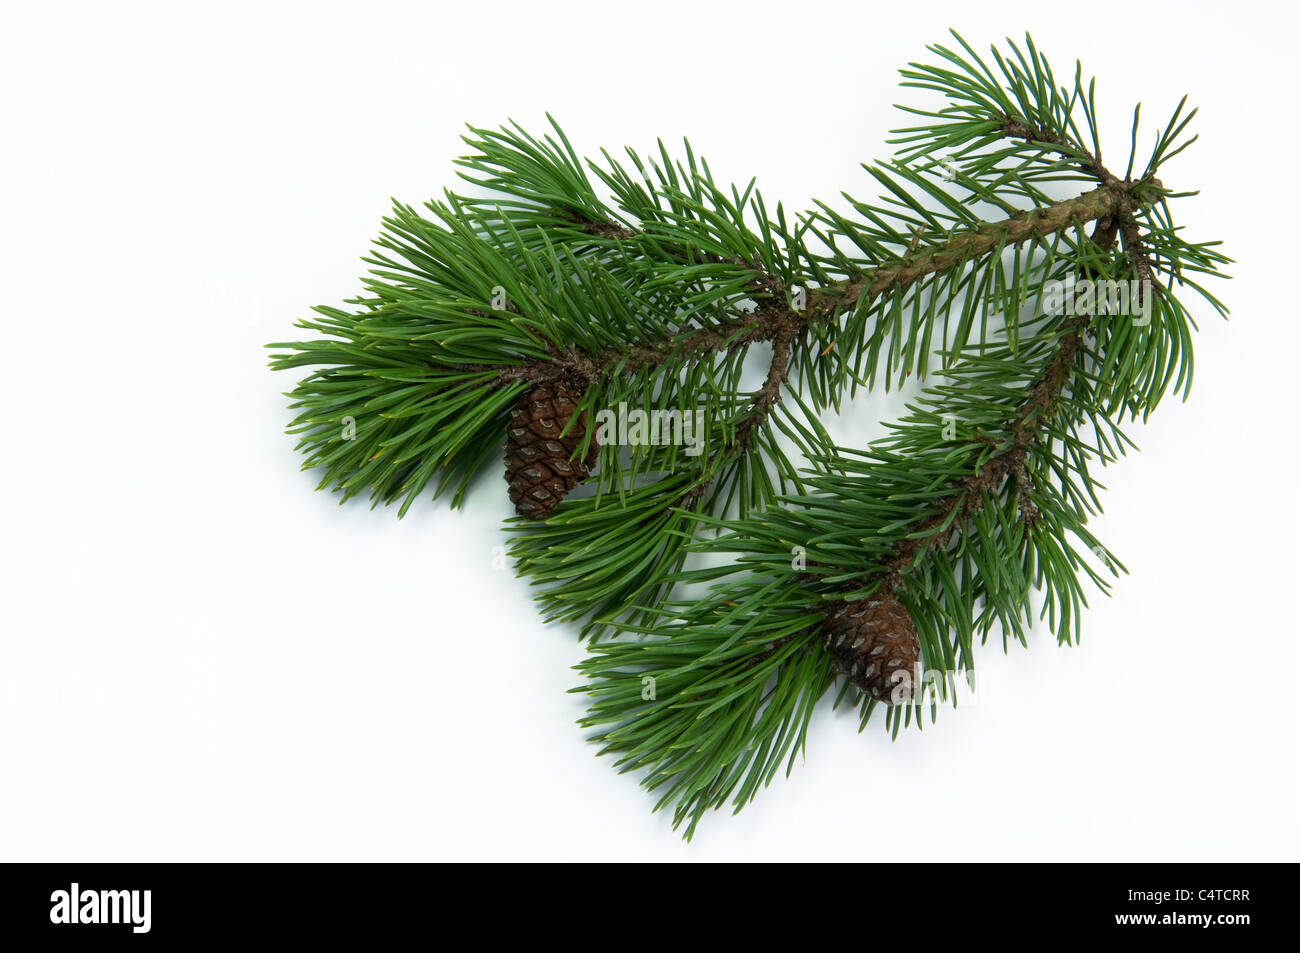 Pin nain, le Dendroctone du pin (Pinus mugo mugo), branche avec les cônes. Studio shot sur un fond blanc. Banque D'Images